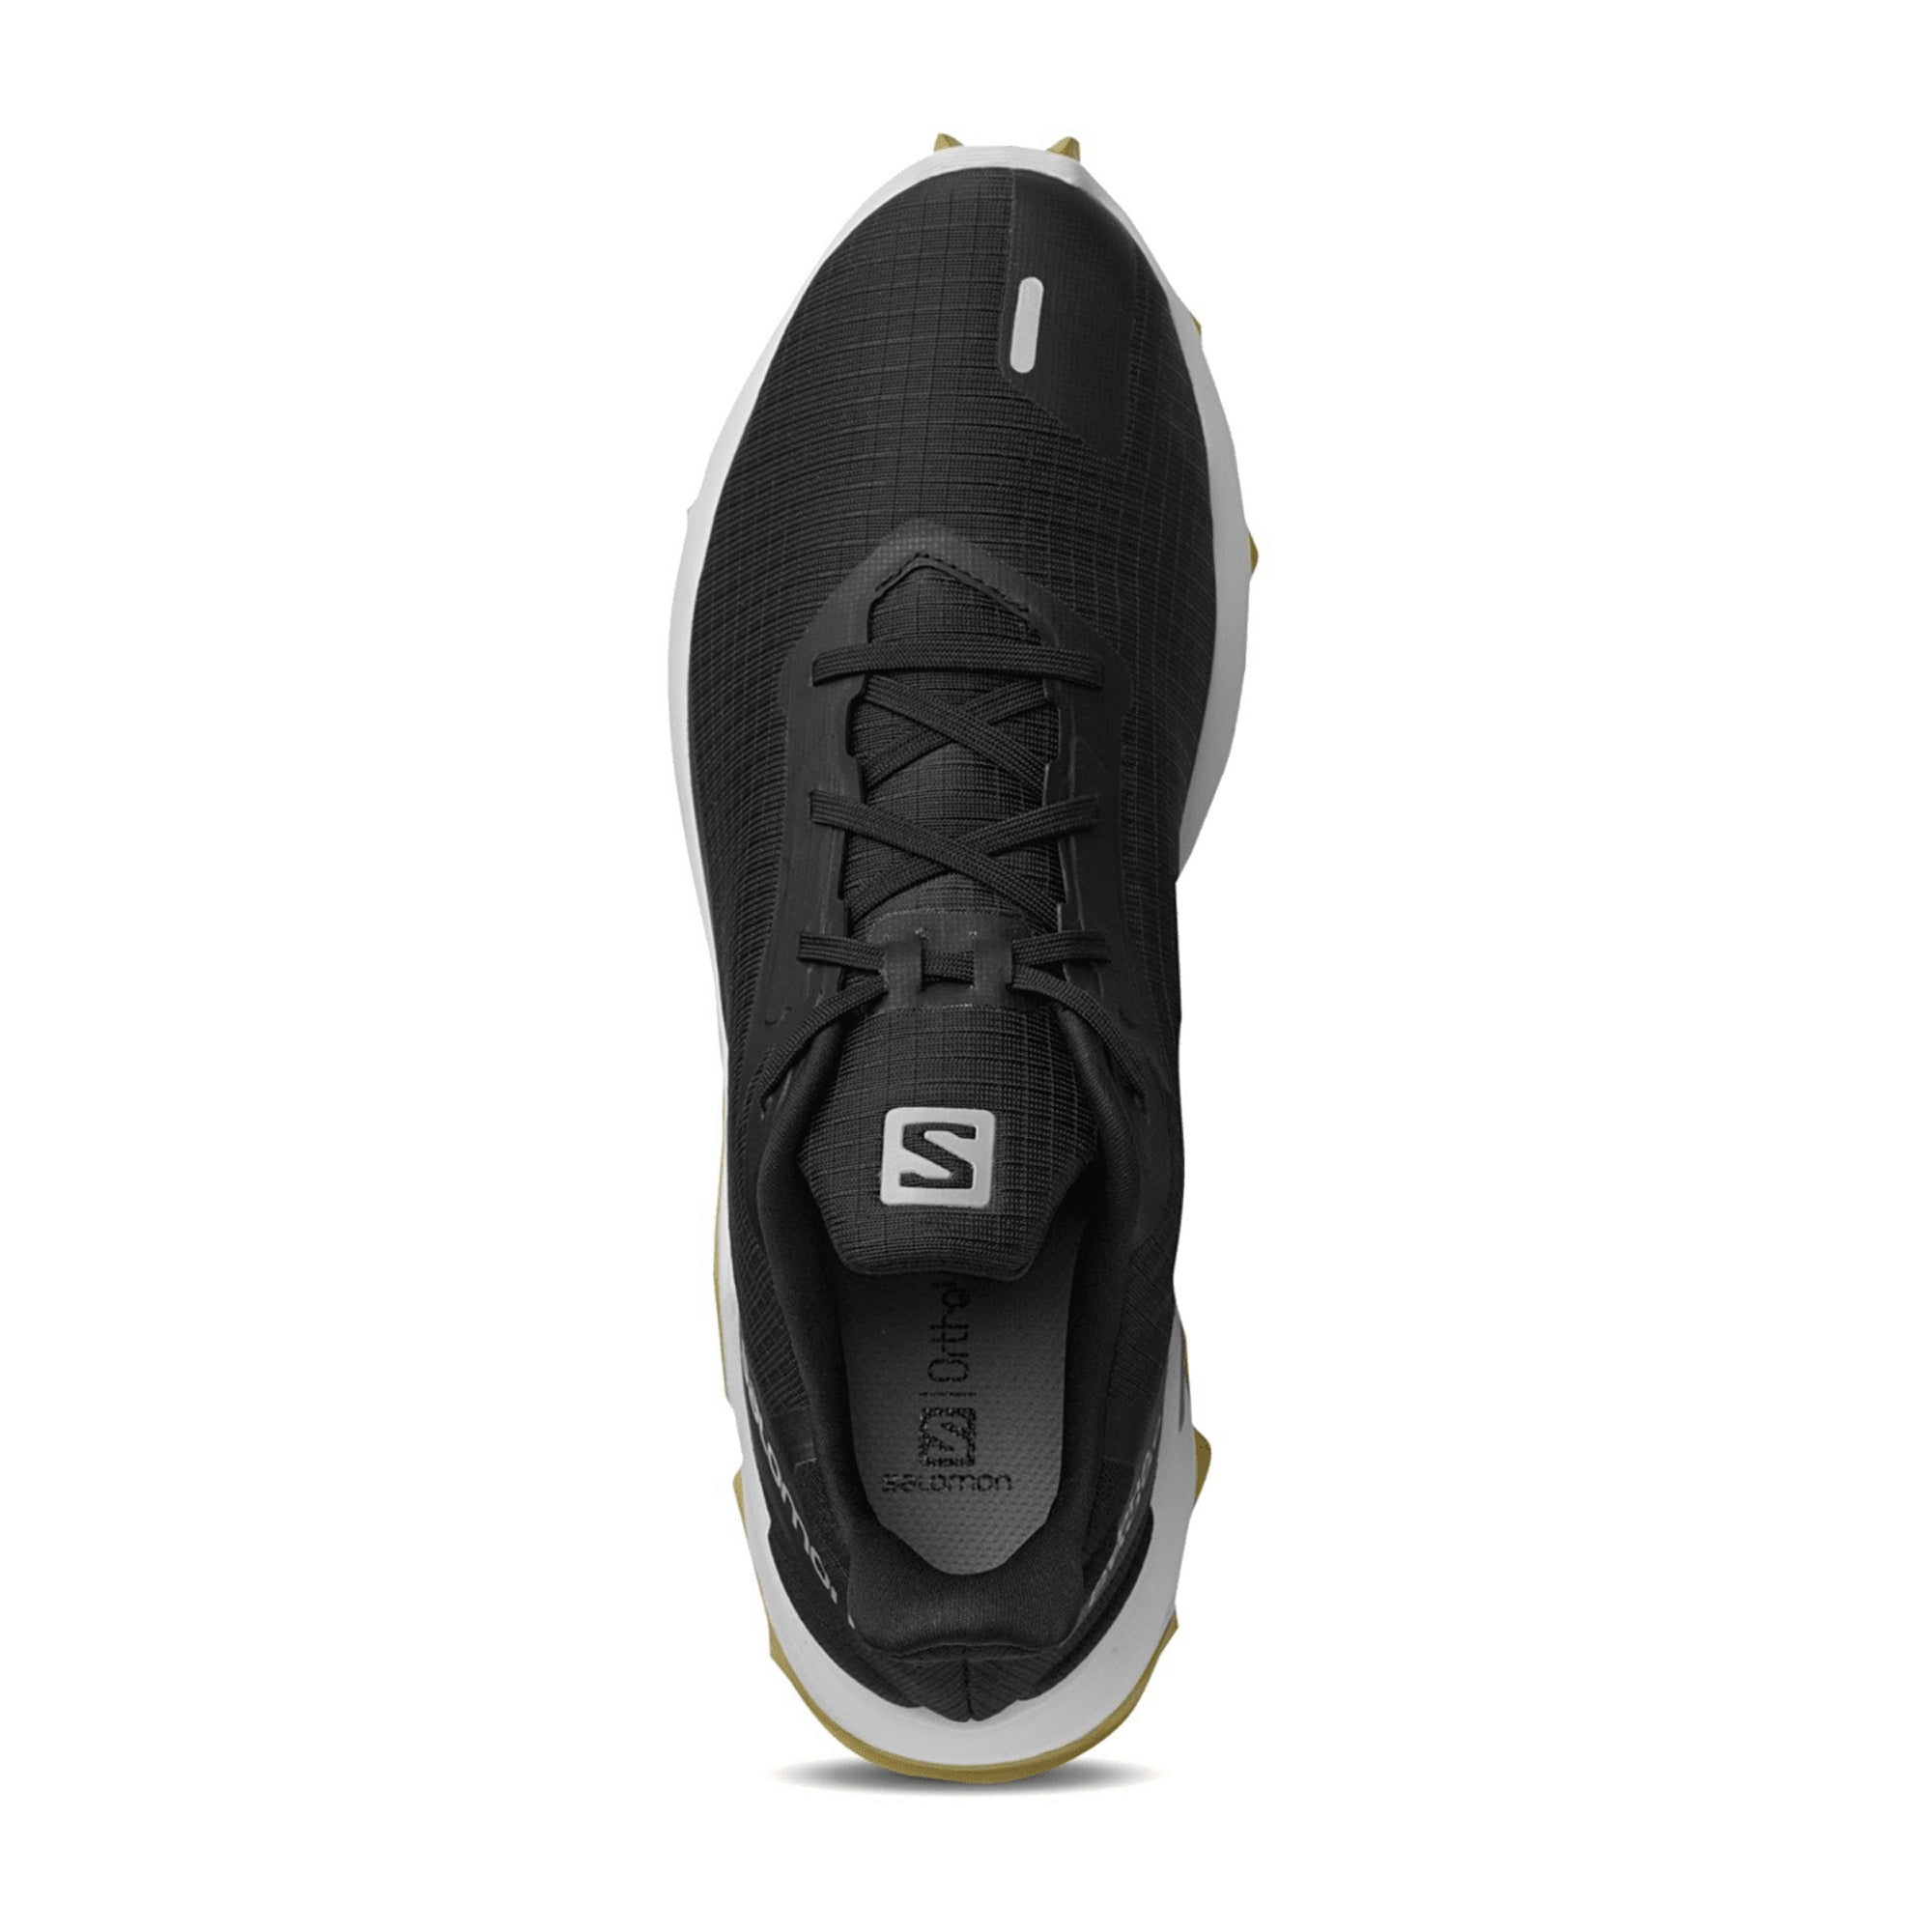 Salomon shoes ALPHACROSS 3 for women, black